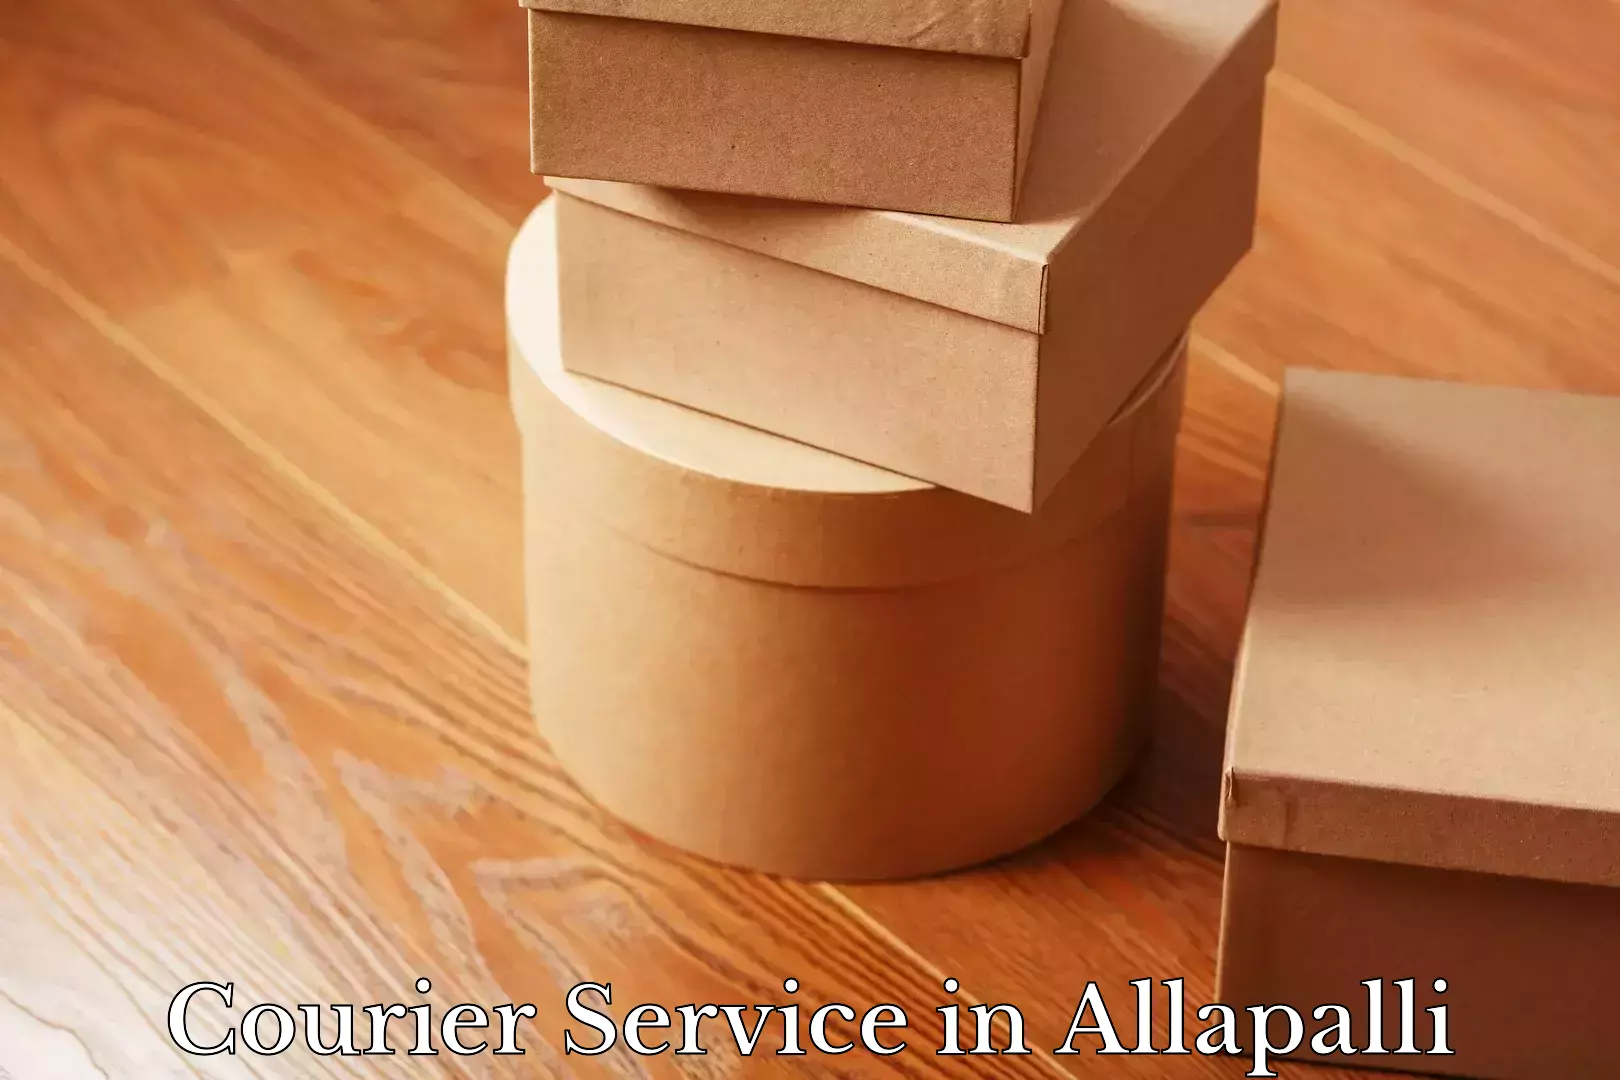 Efficient order fulfillment in Allapalli